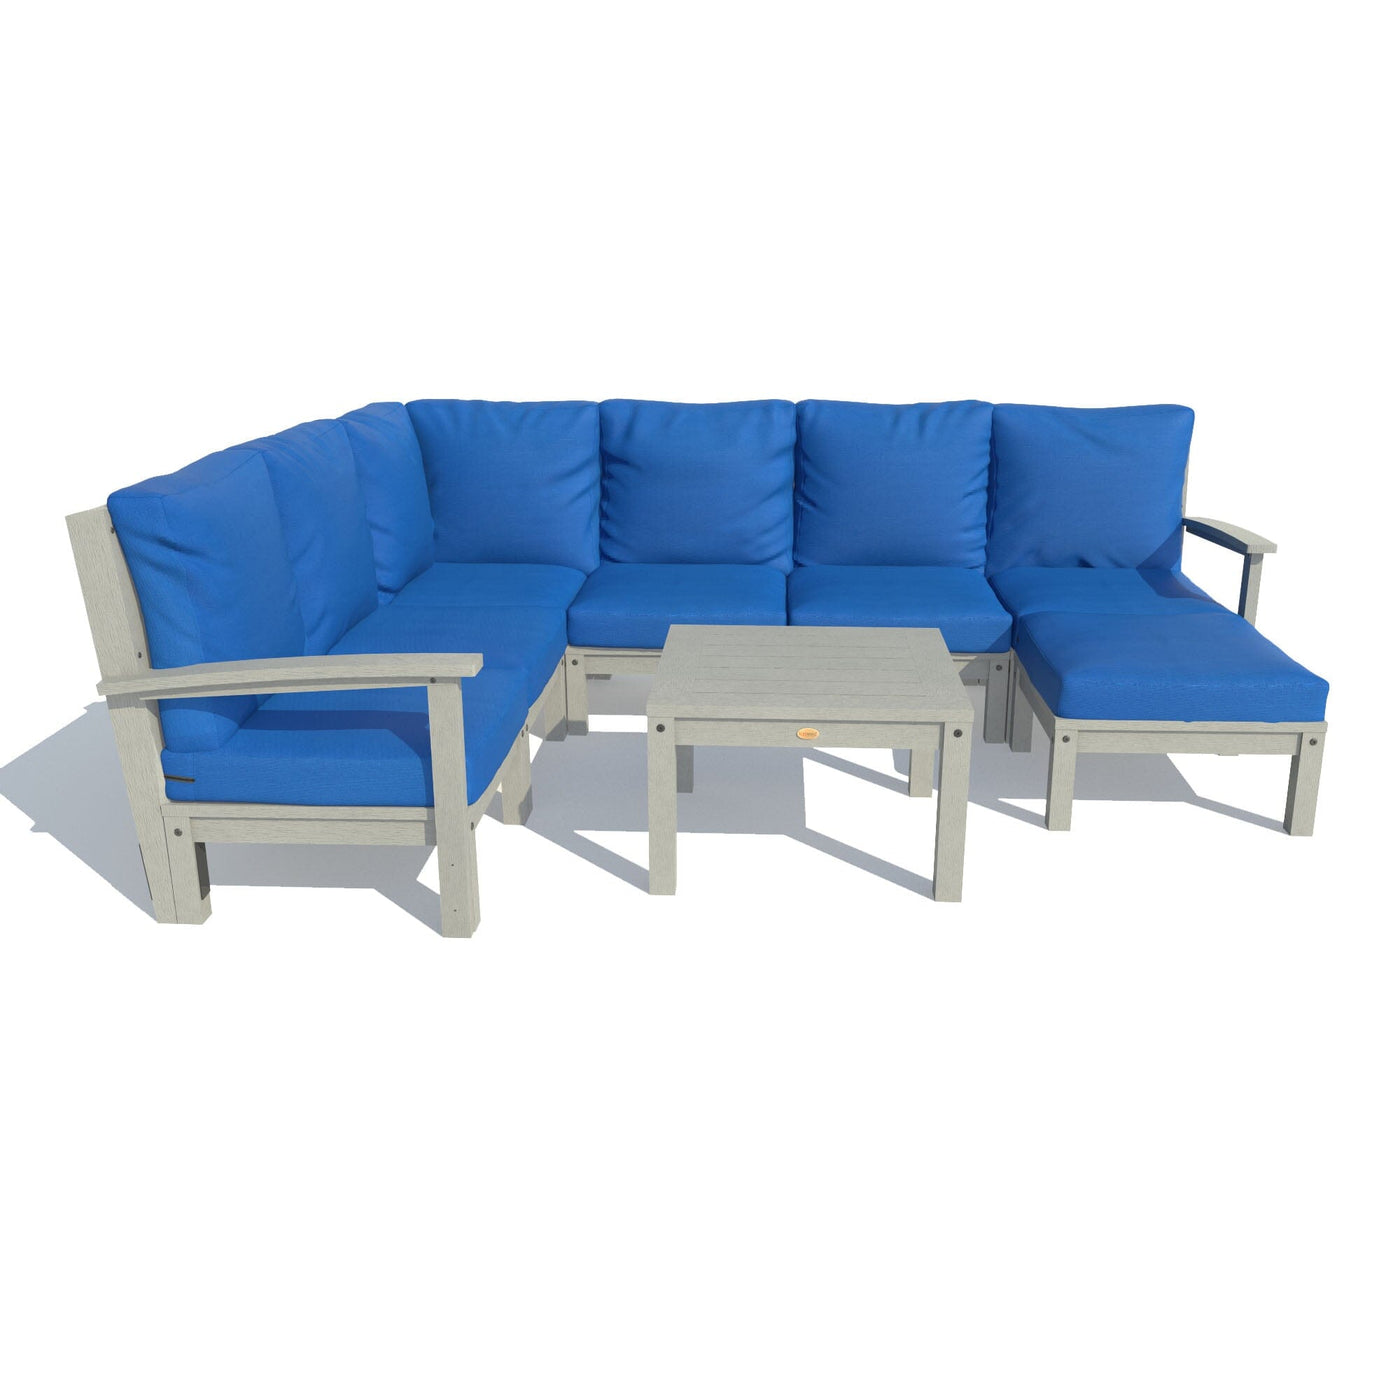 Bespoke Deep Seating: 8 Piece Sectional Sofa Set with Ottoman and Side Table Deep Seating Highwood USA Cobalt Blue Coastal Teak 